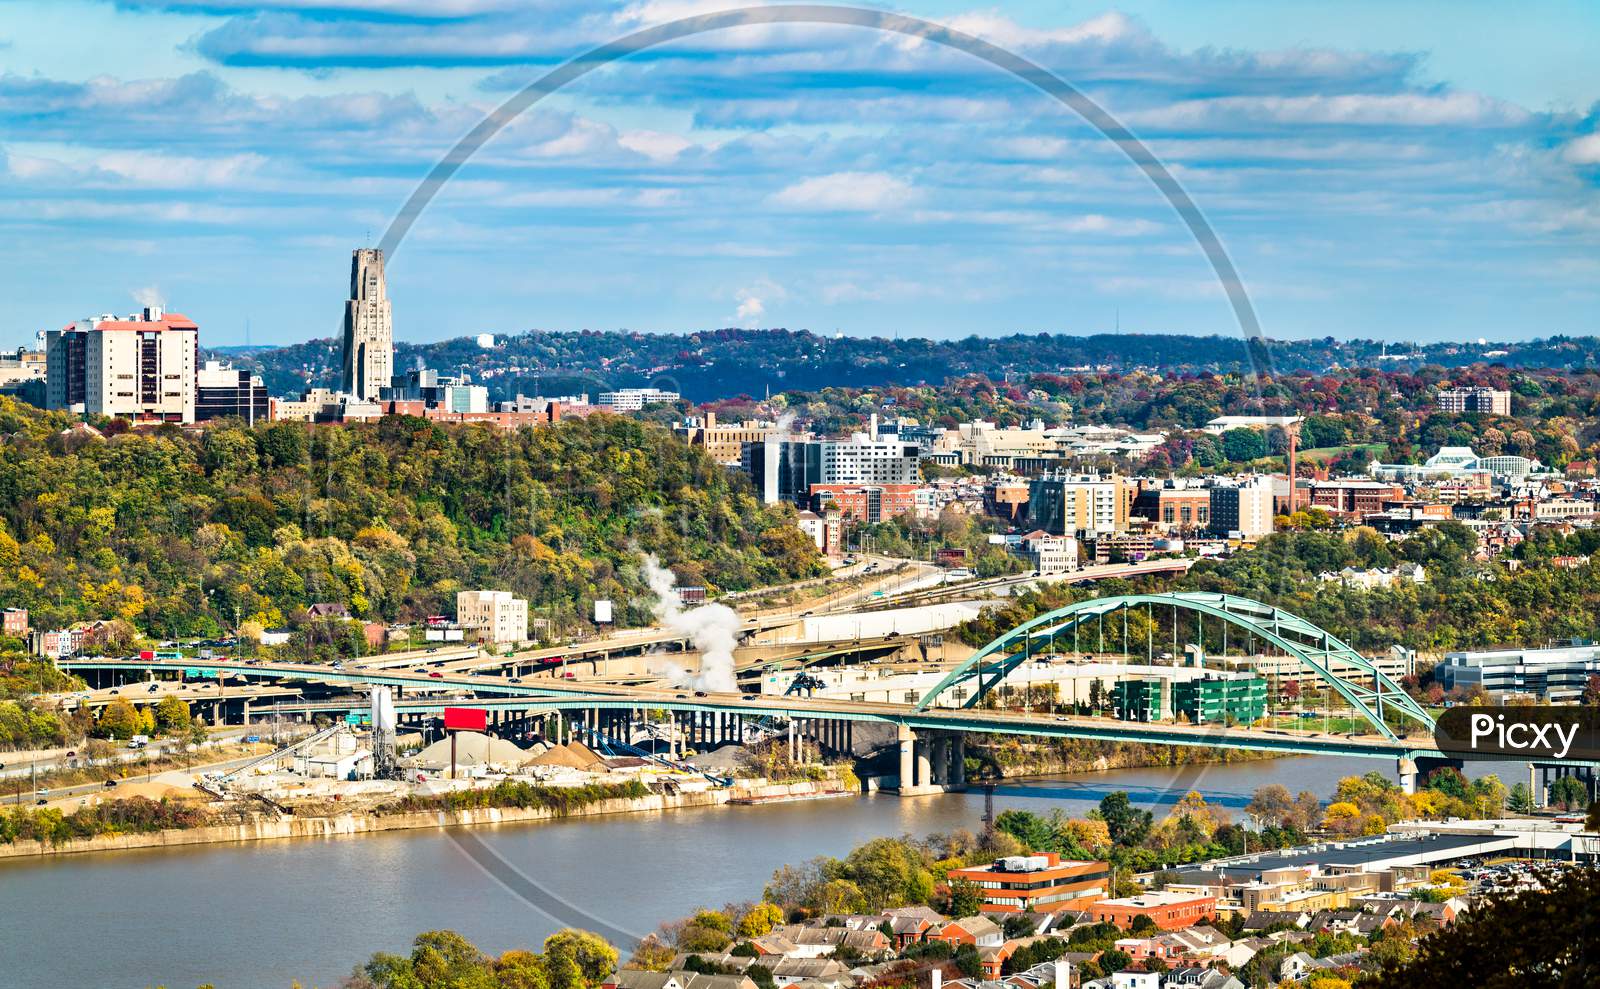 Birmingham Bridge Across The Monongahela River In Pittsburgh, Pennsylvania